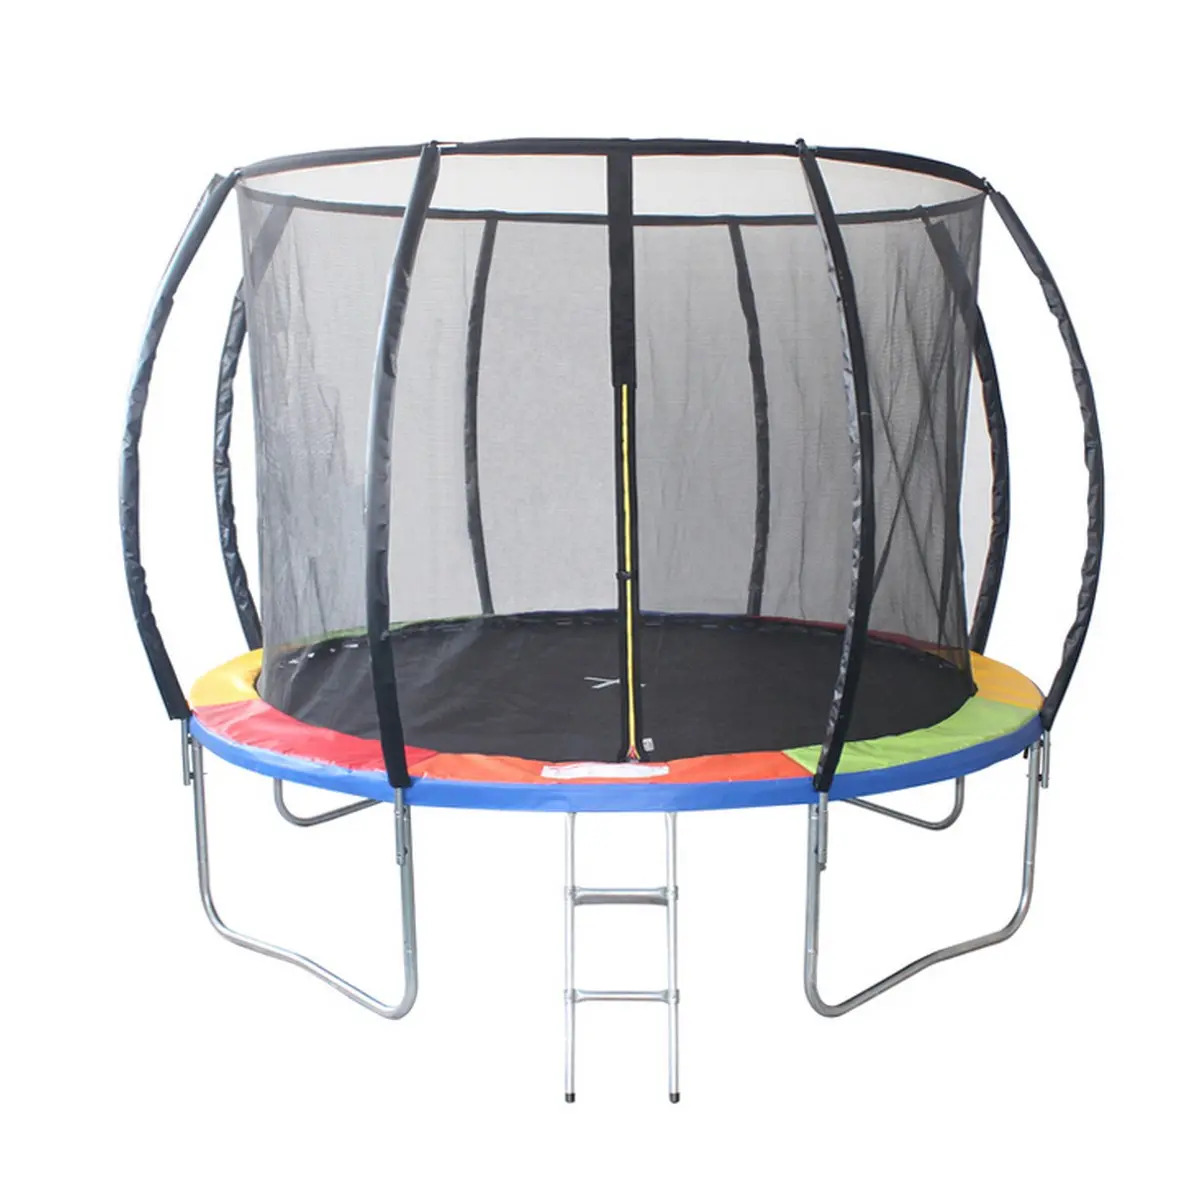 Free Play trampolin s ljestvama, 305 cm image